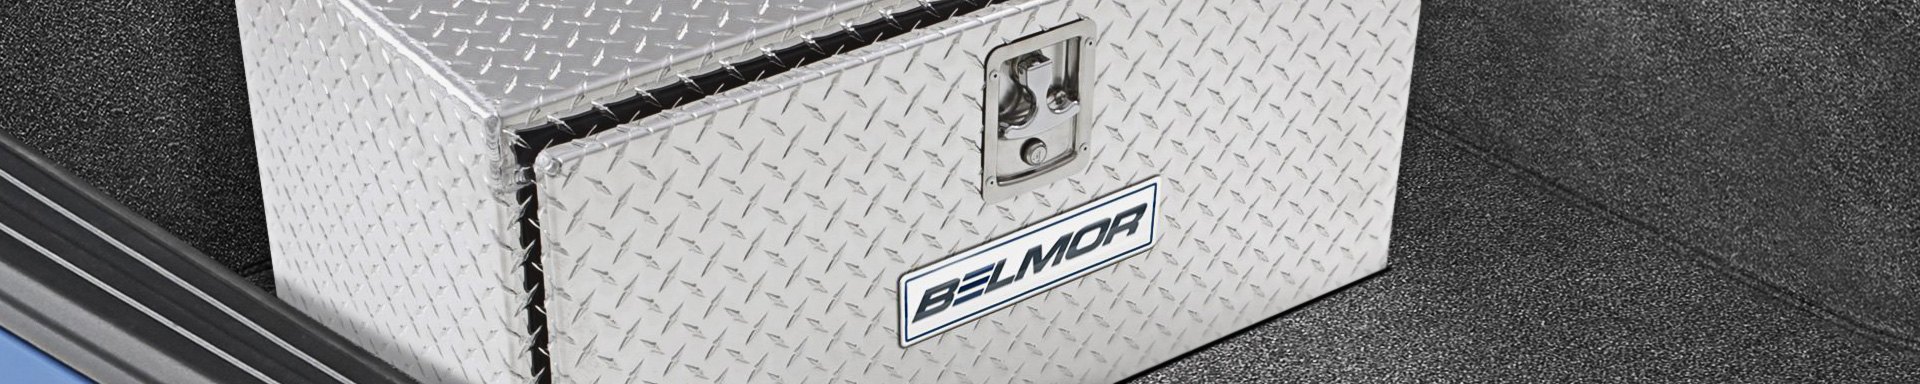 Belmor Tool Boxes